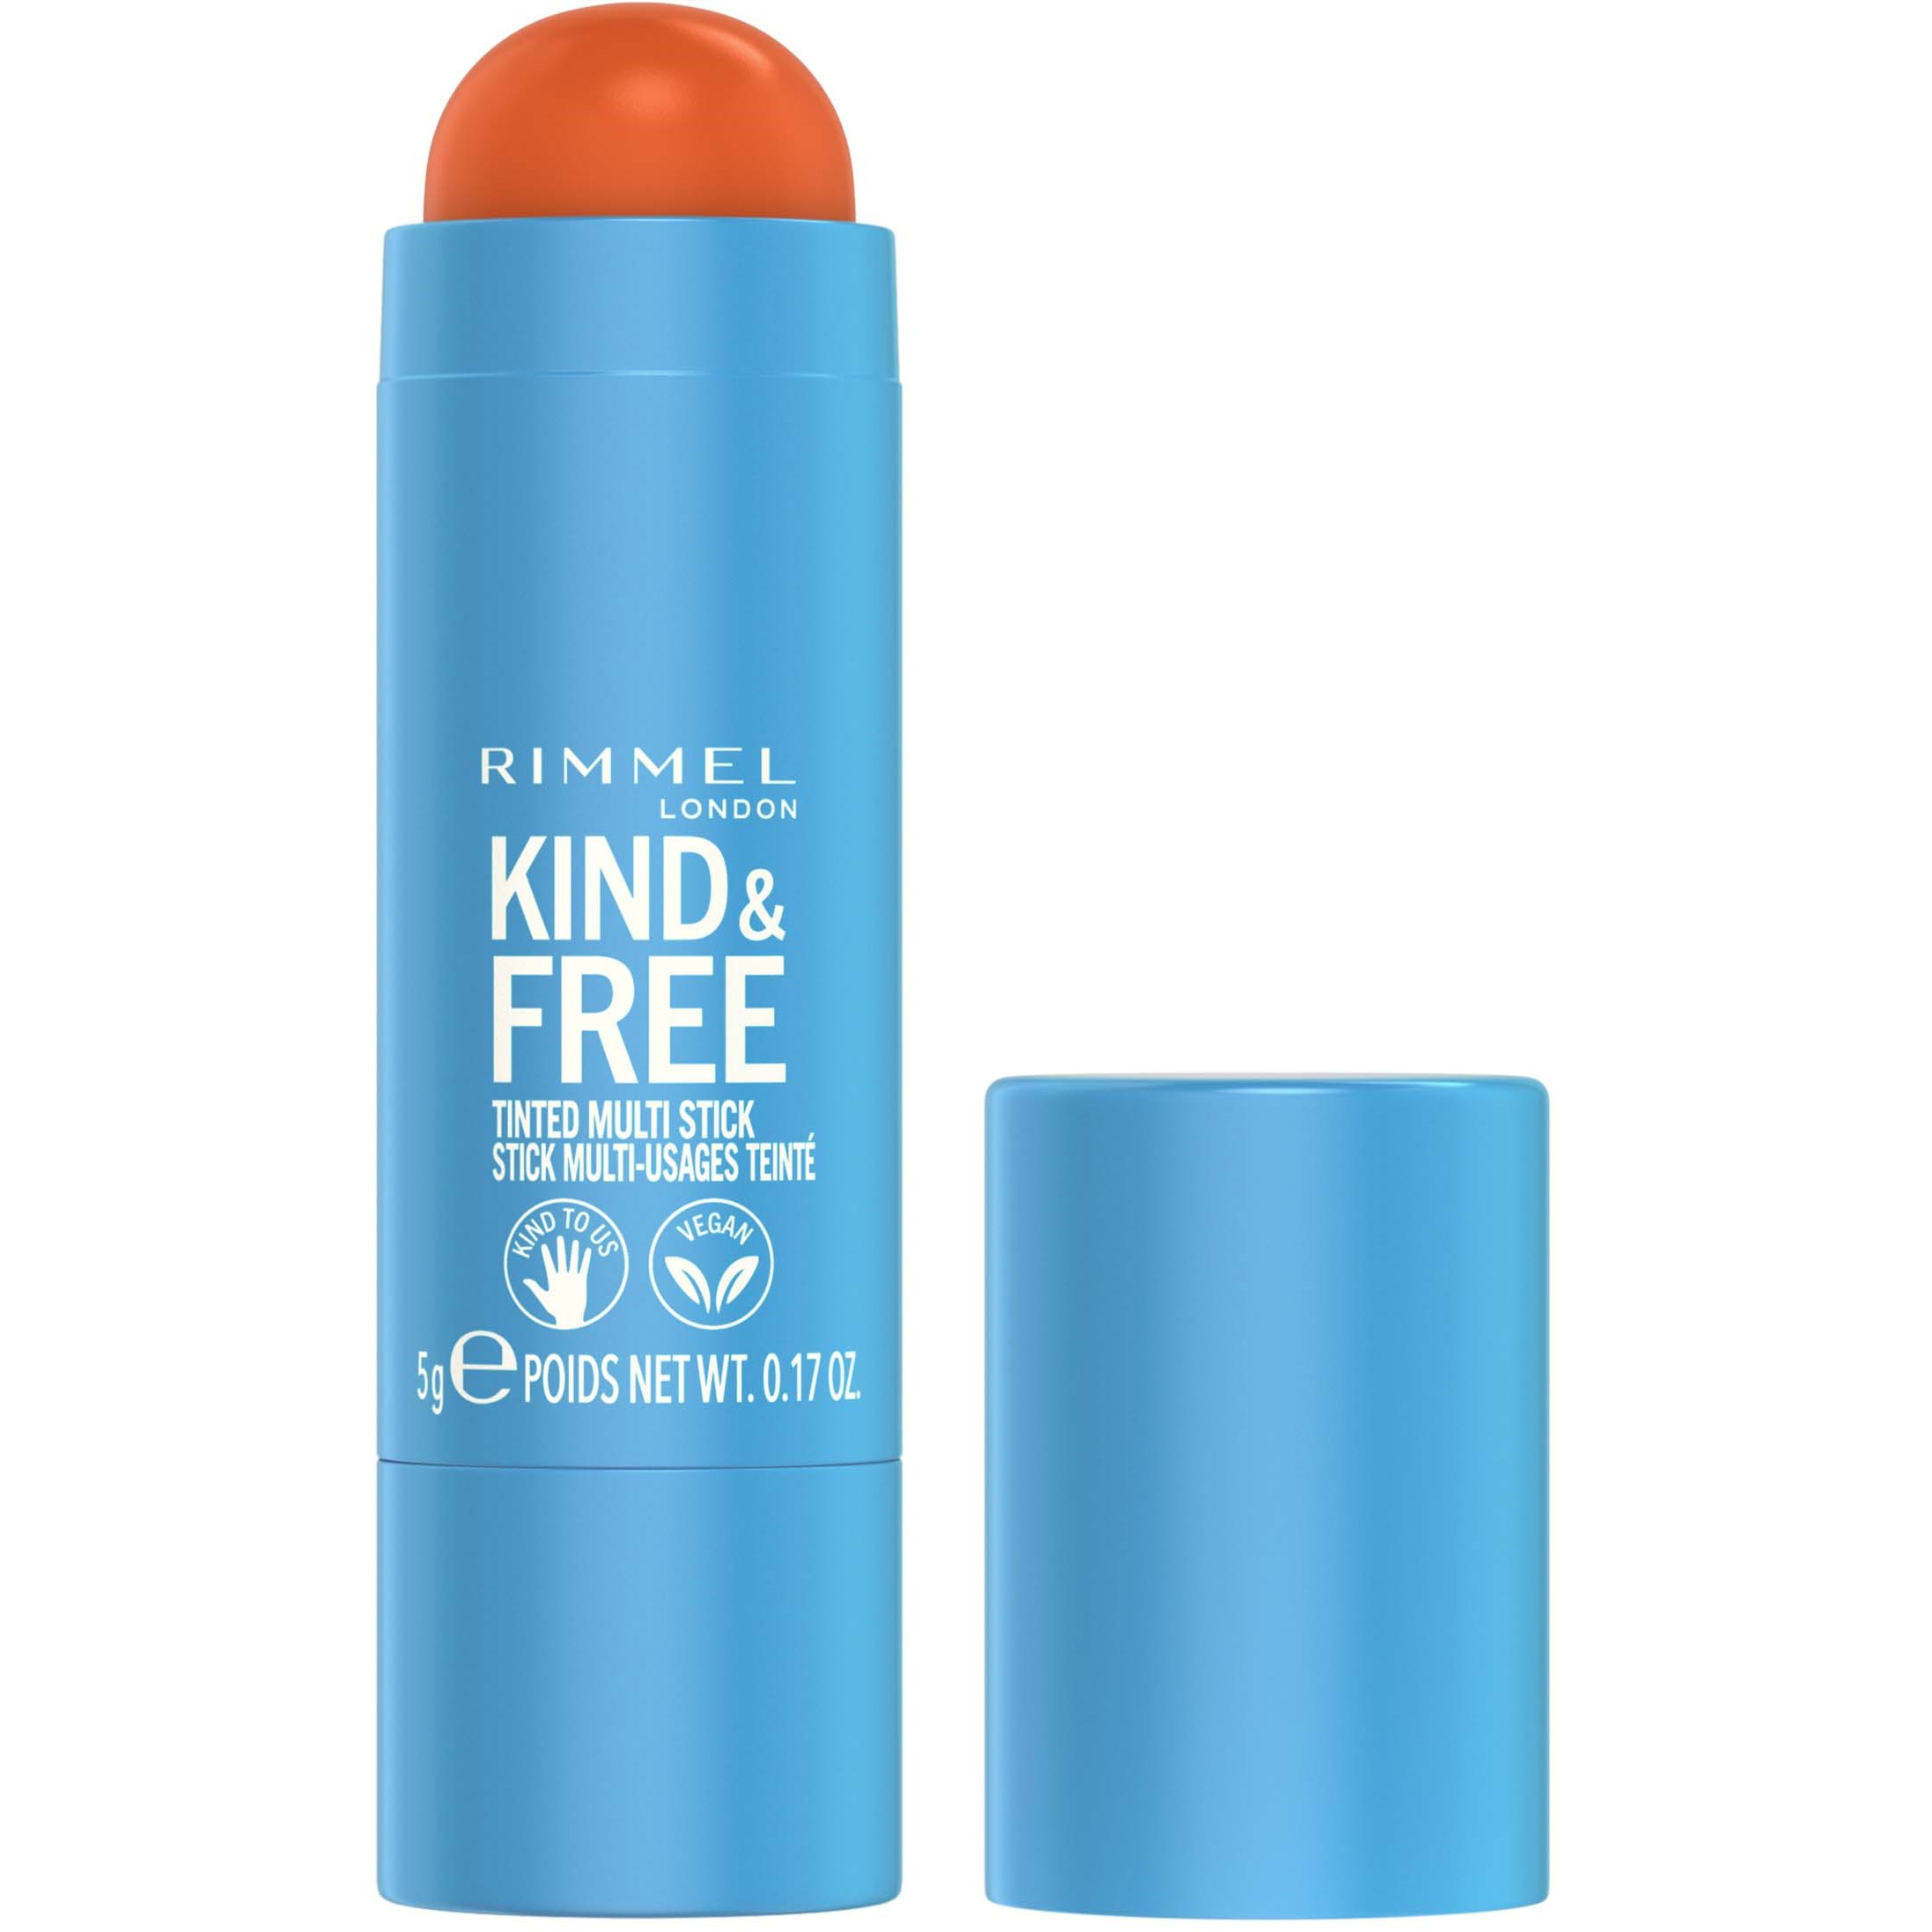 Rimmel Kind & Free Tinted Multi Stick 004 Tangerine Dream